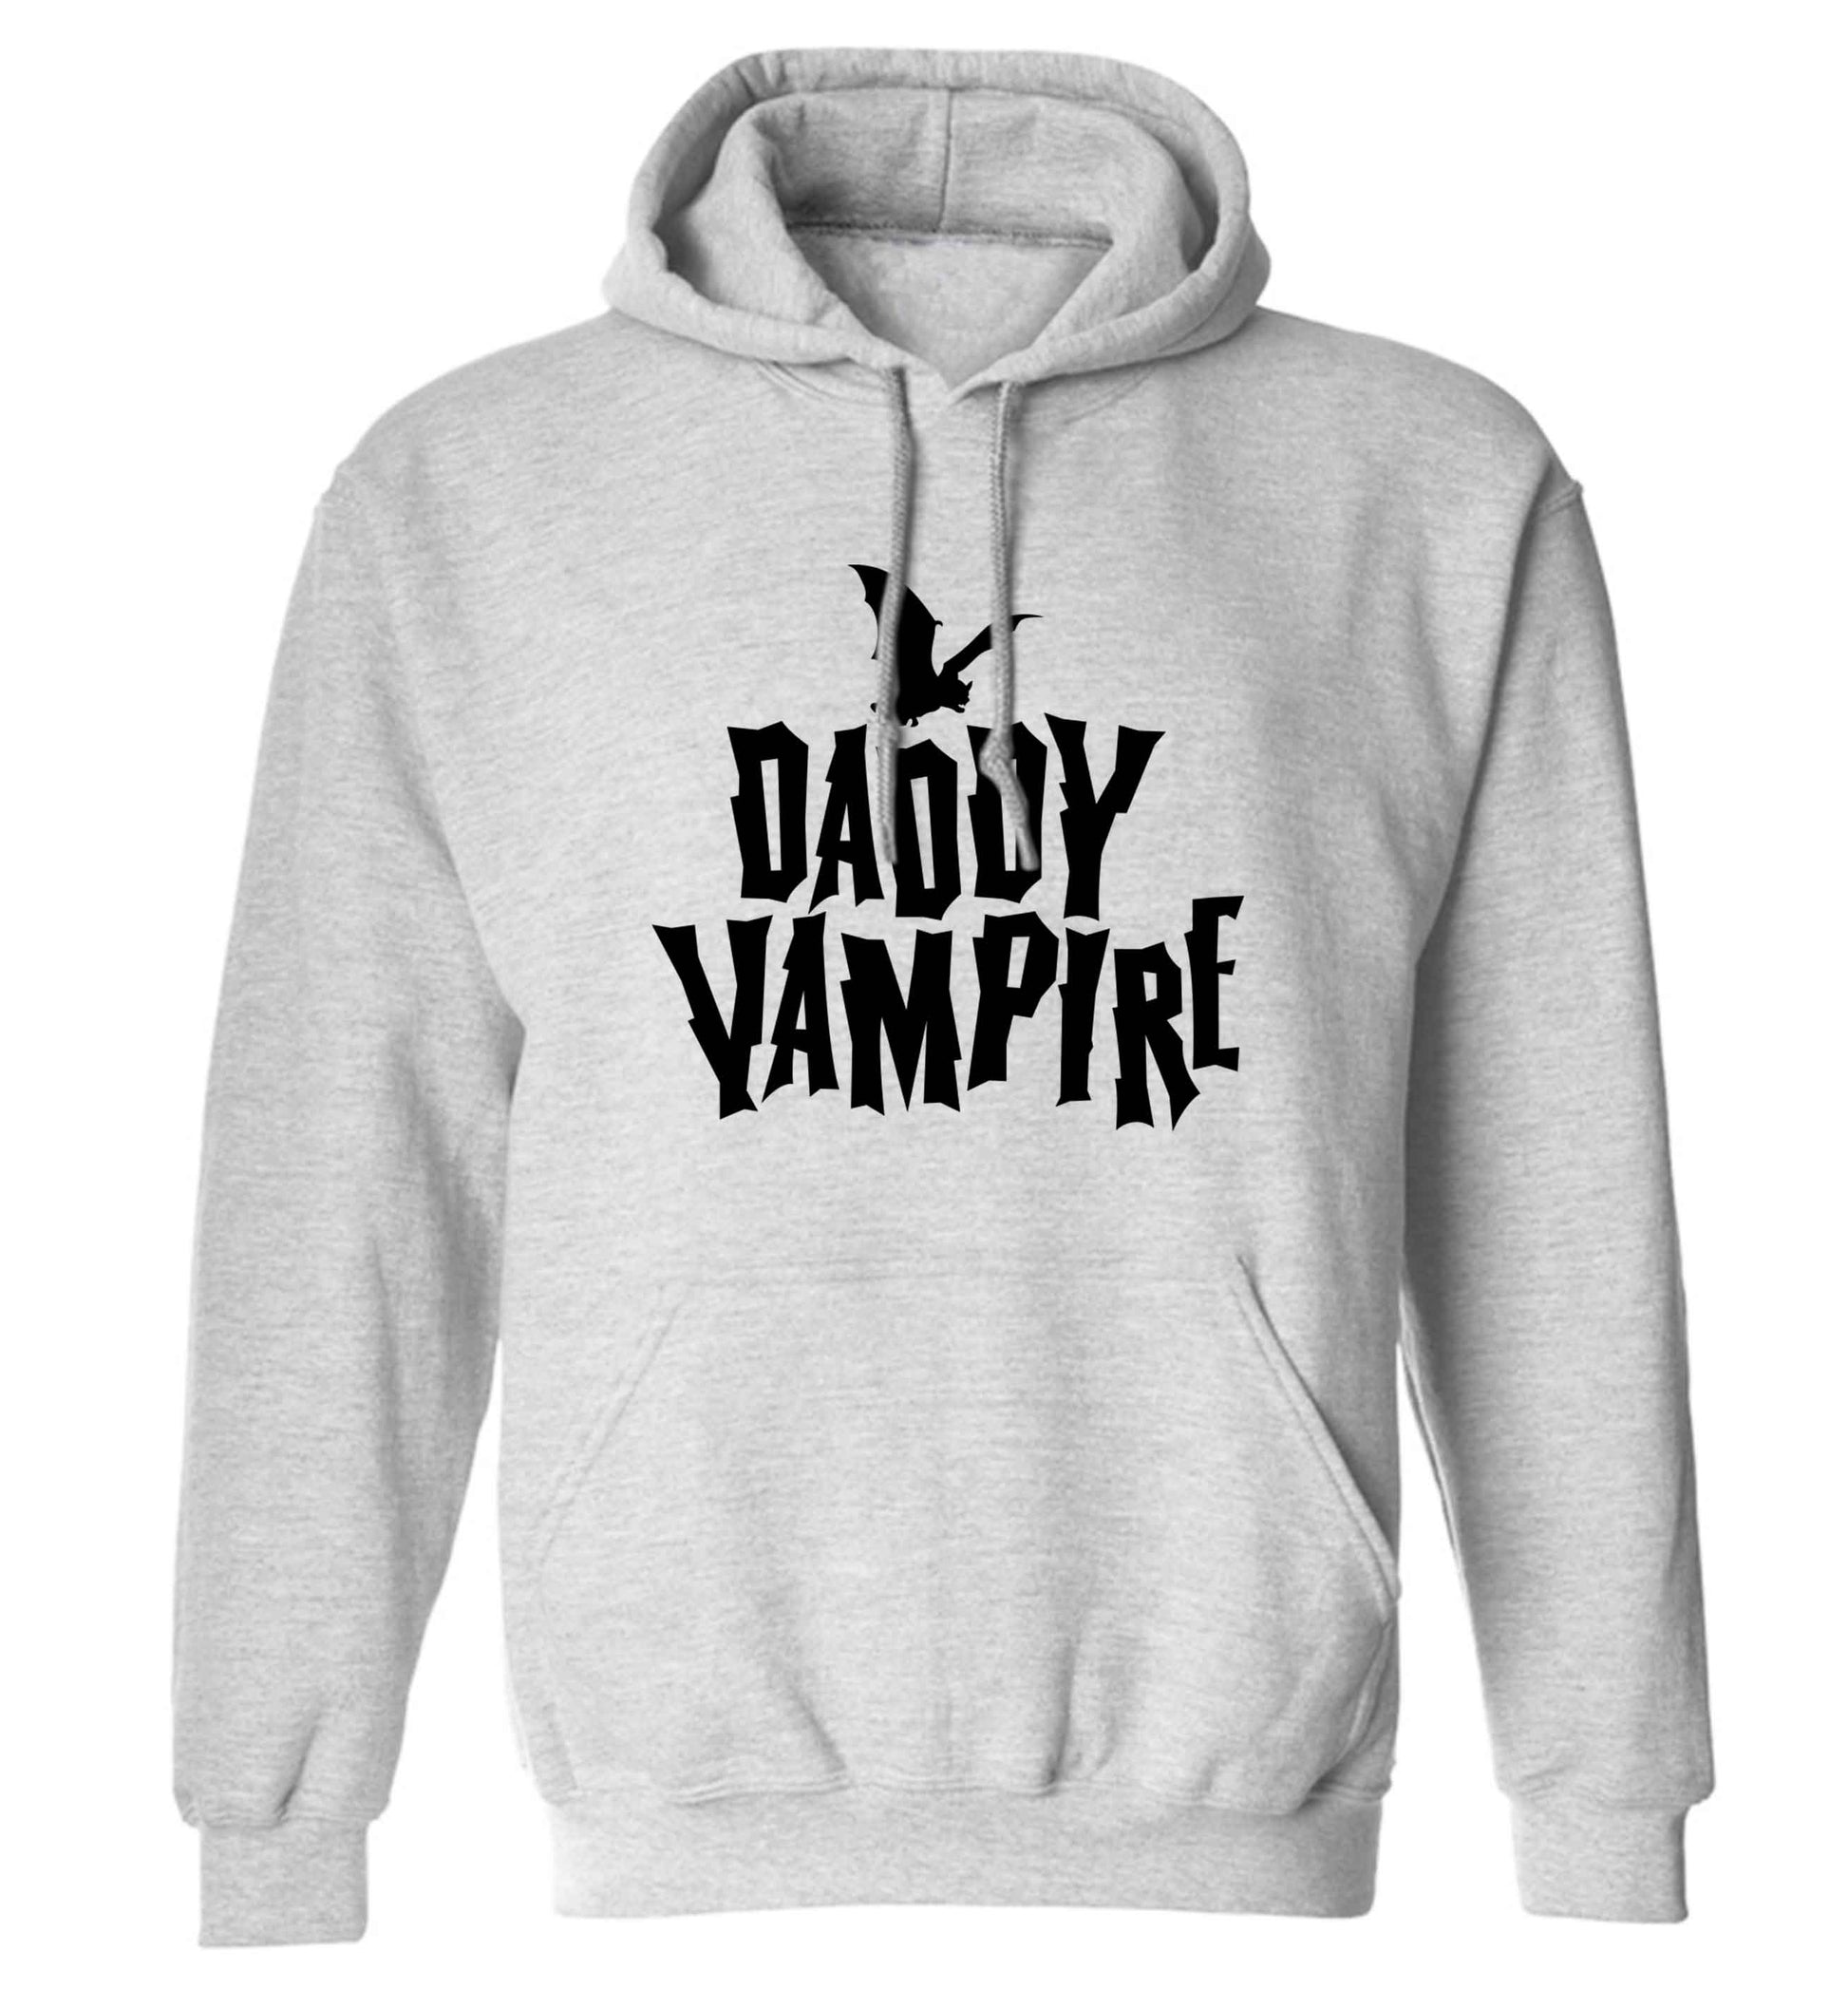 Daddy vampire adults unisex grey hoodie 2XL